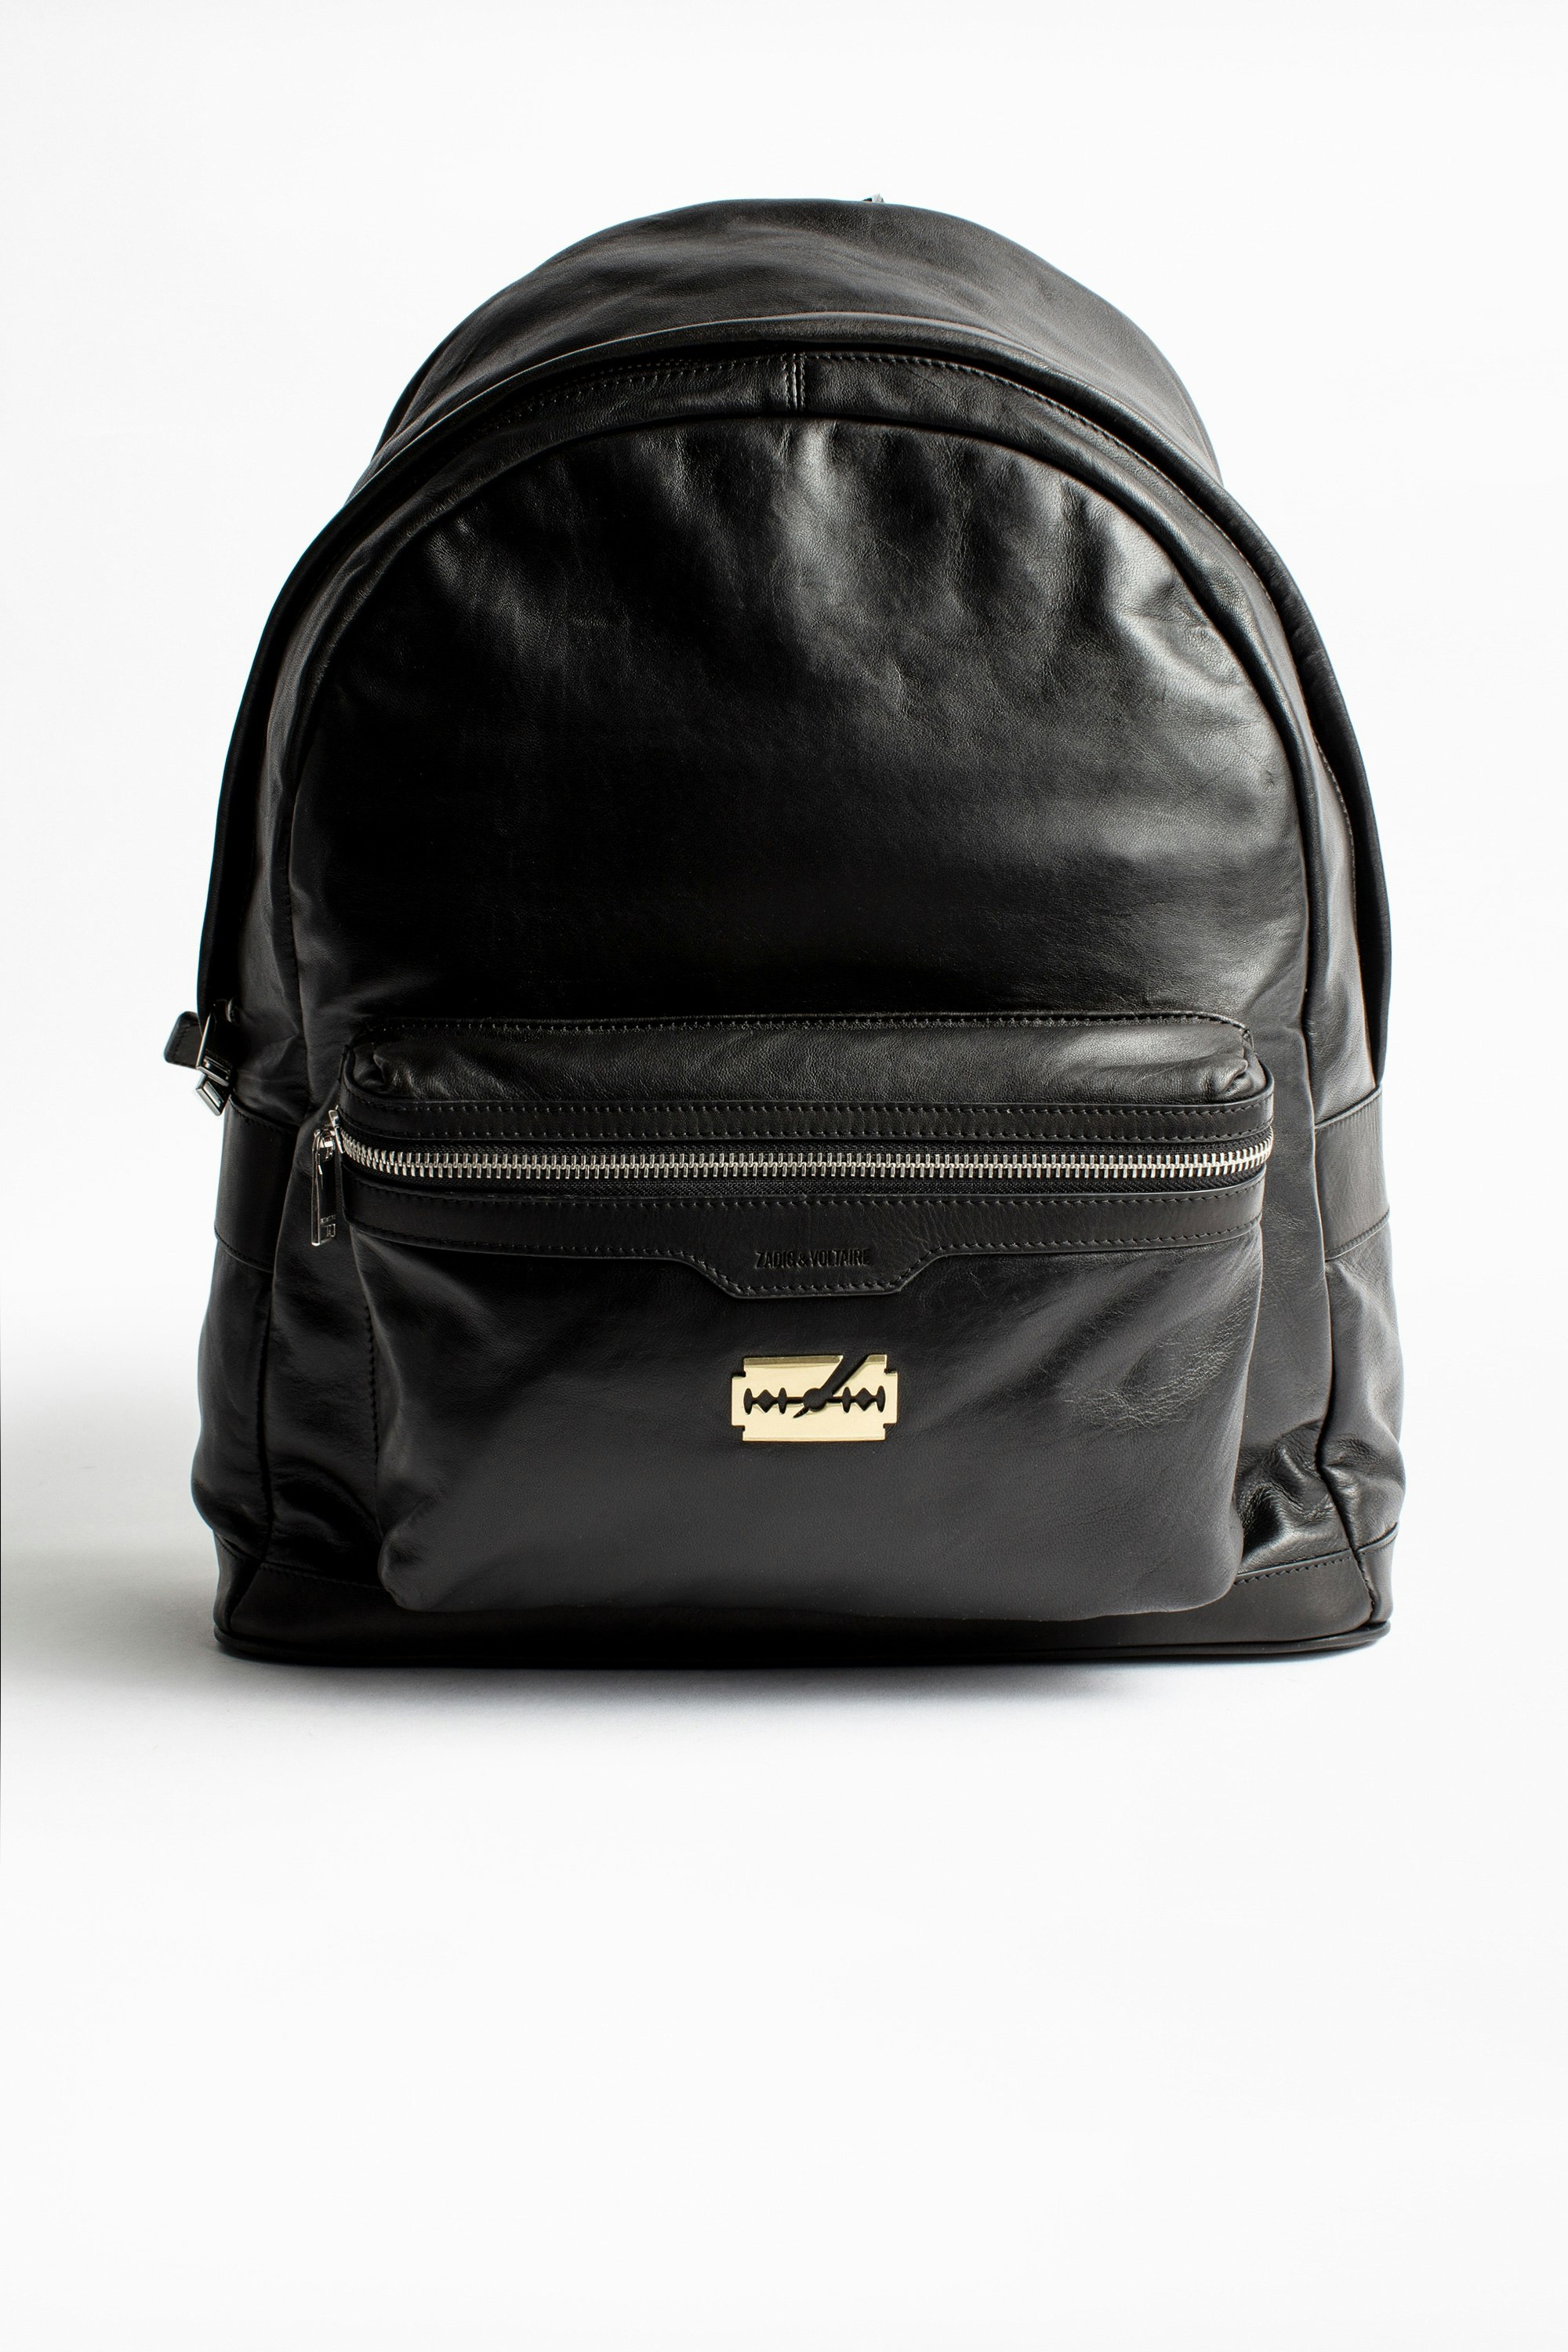 jordan leather backpack